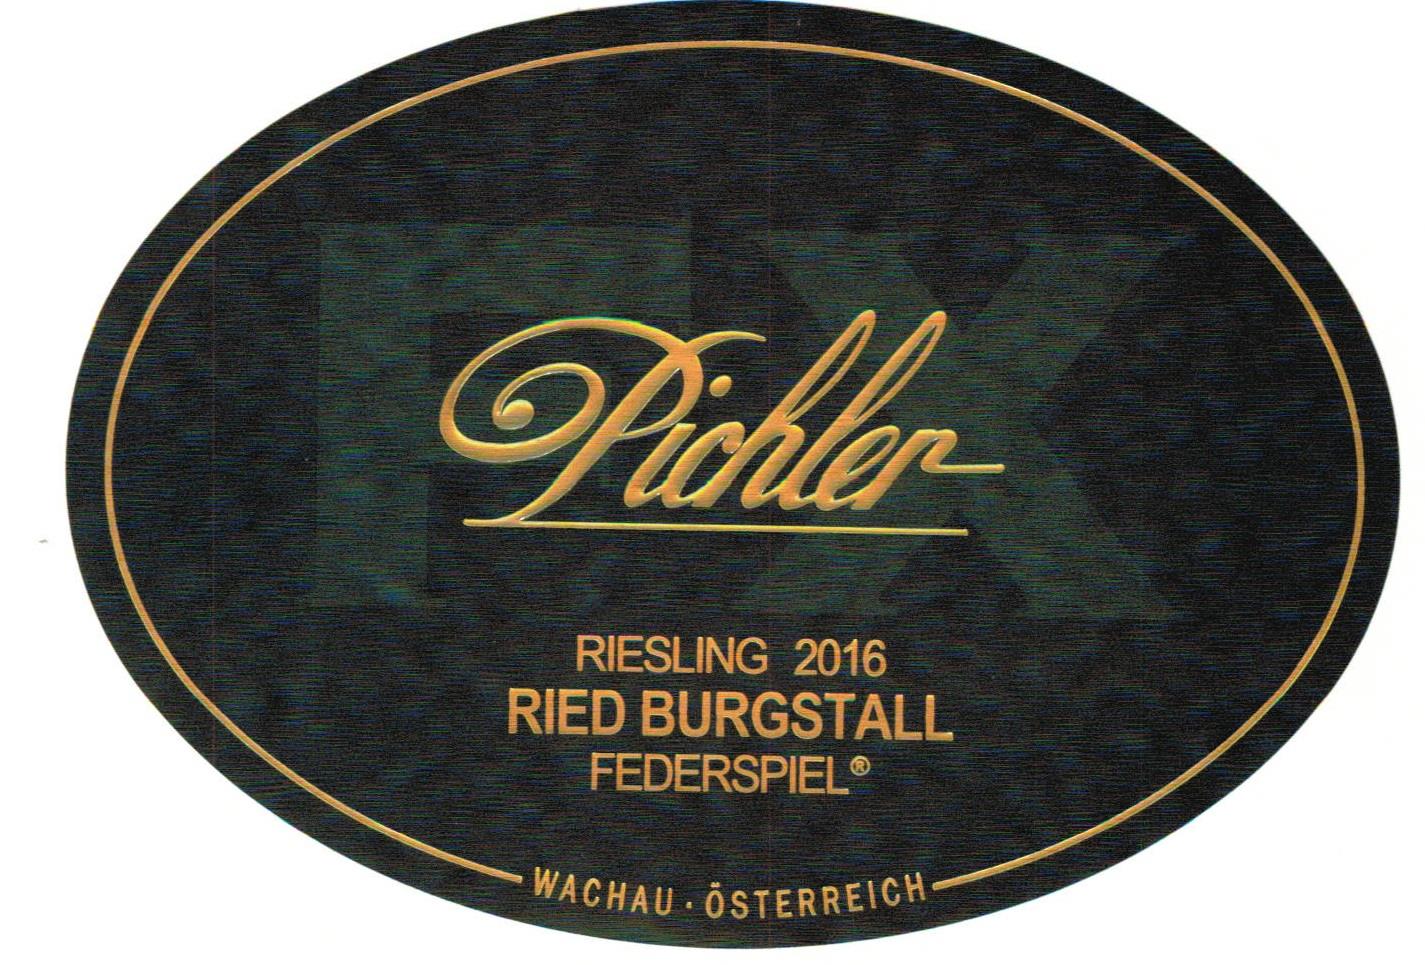 2019 FX PICHLER RIESLING RIED BURGSTALL FEDERSPIEL AUSTRIA - click image for full description